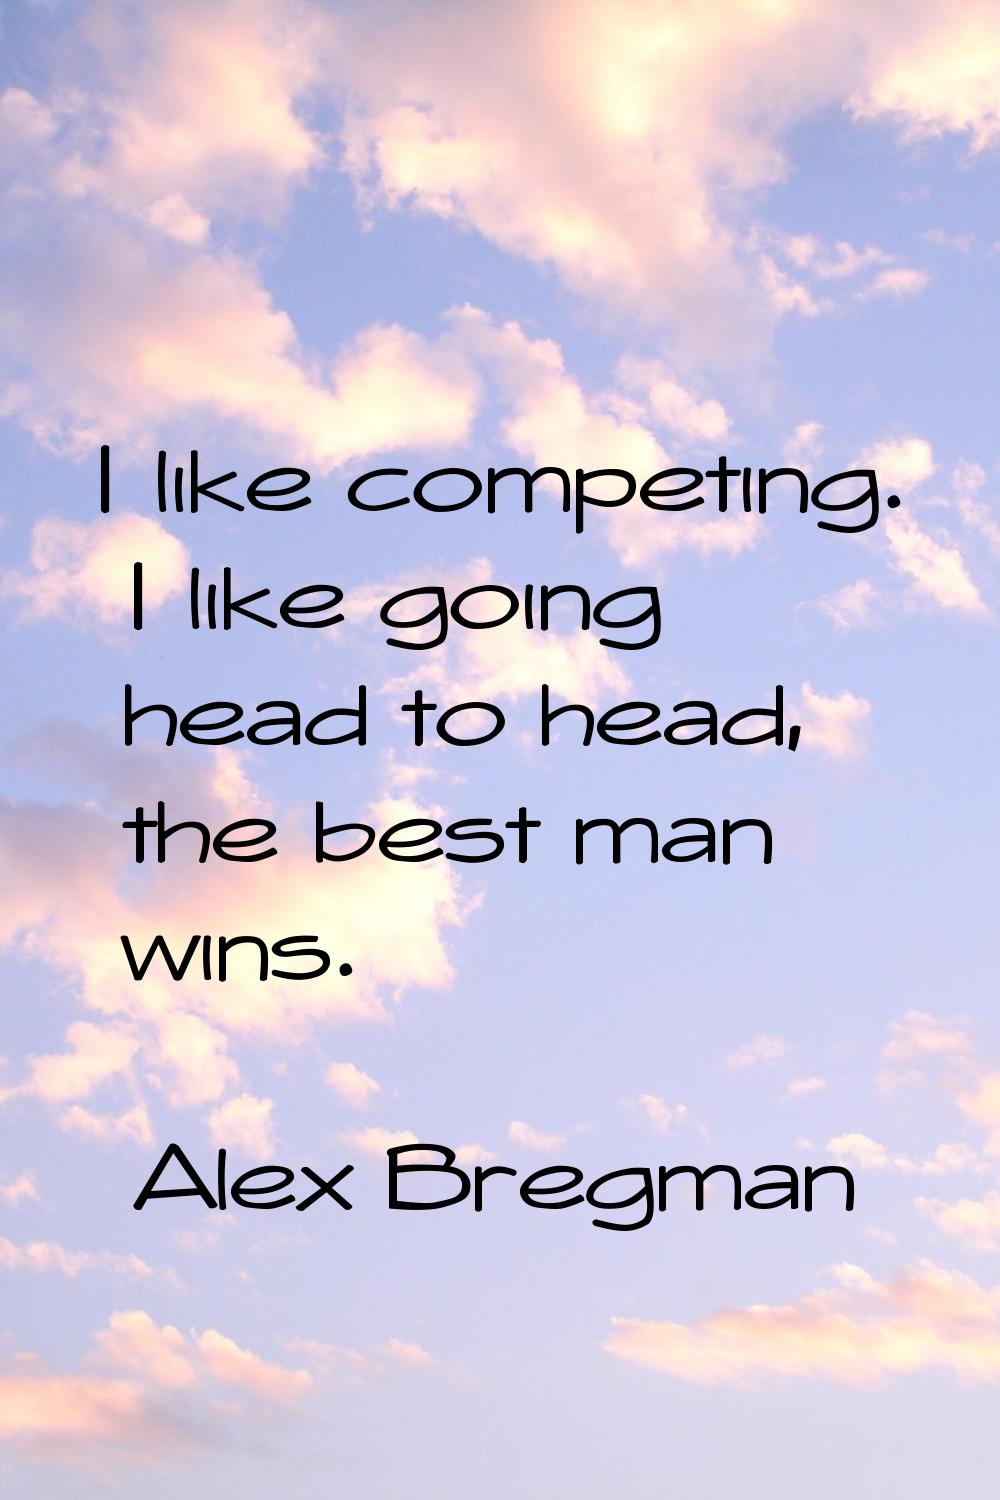 I like competing. I like going head to head, the best man wins.